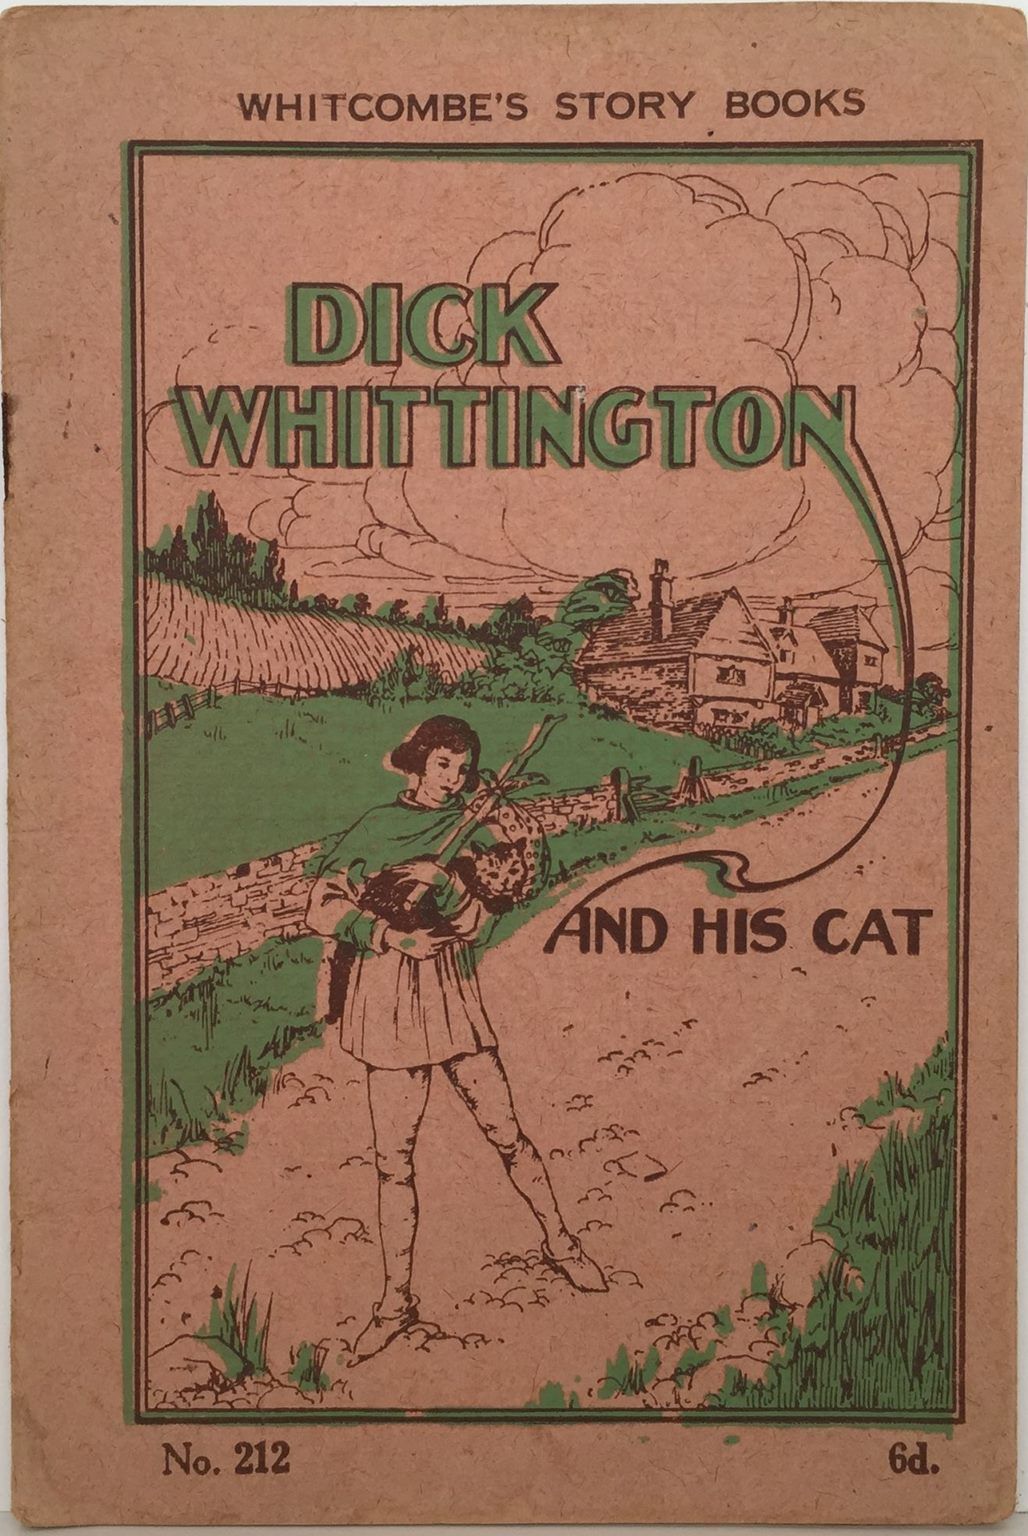 DICK WHITTINGTON AND HIS CAT - Whitcombe's Story Books No 212